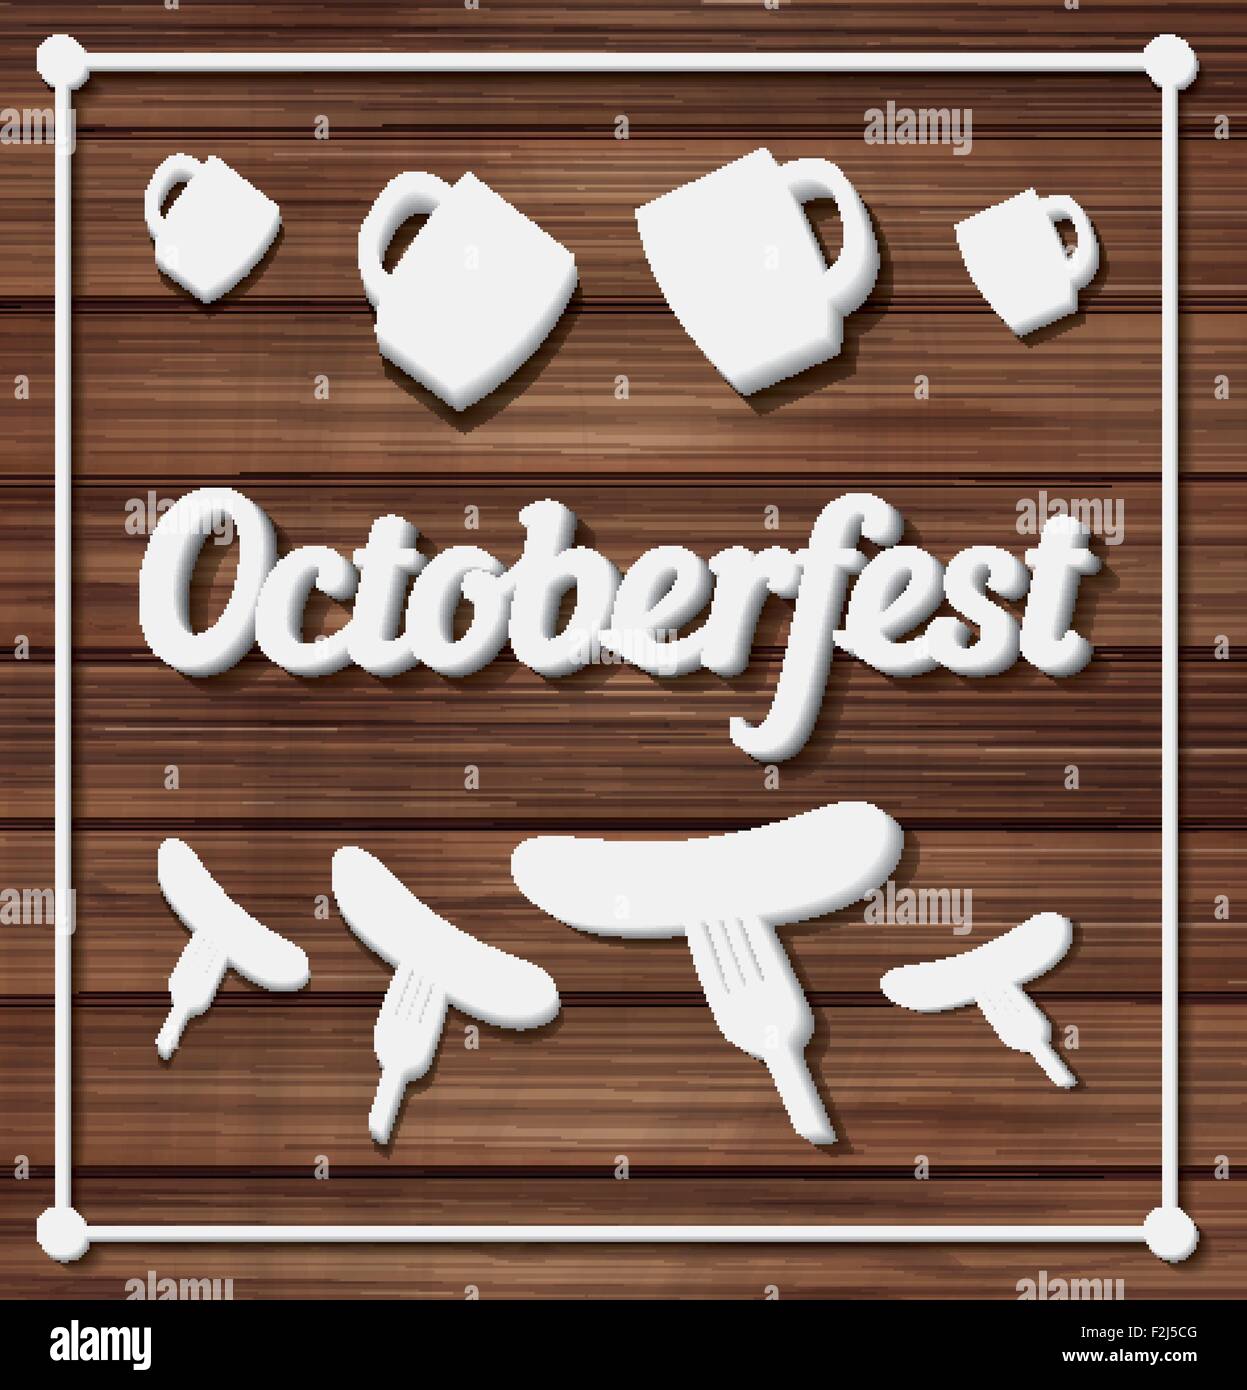 Oktoberfest Festival Typografie Hintergrund. Vektor-Illustration auf Holz Textur Stock Vektor